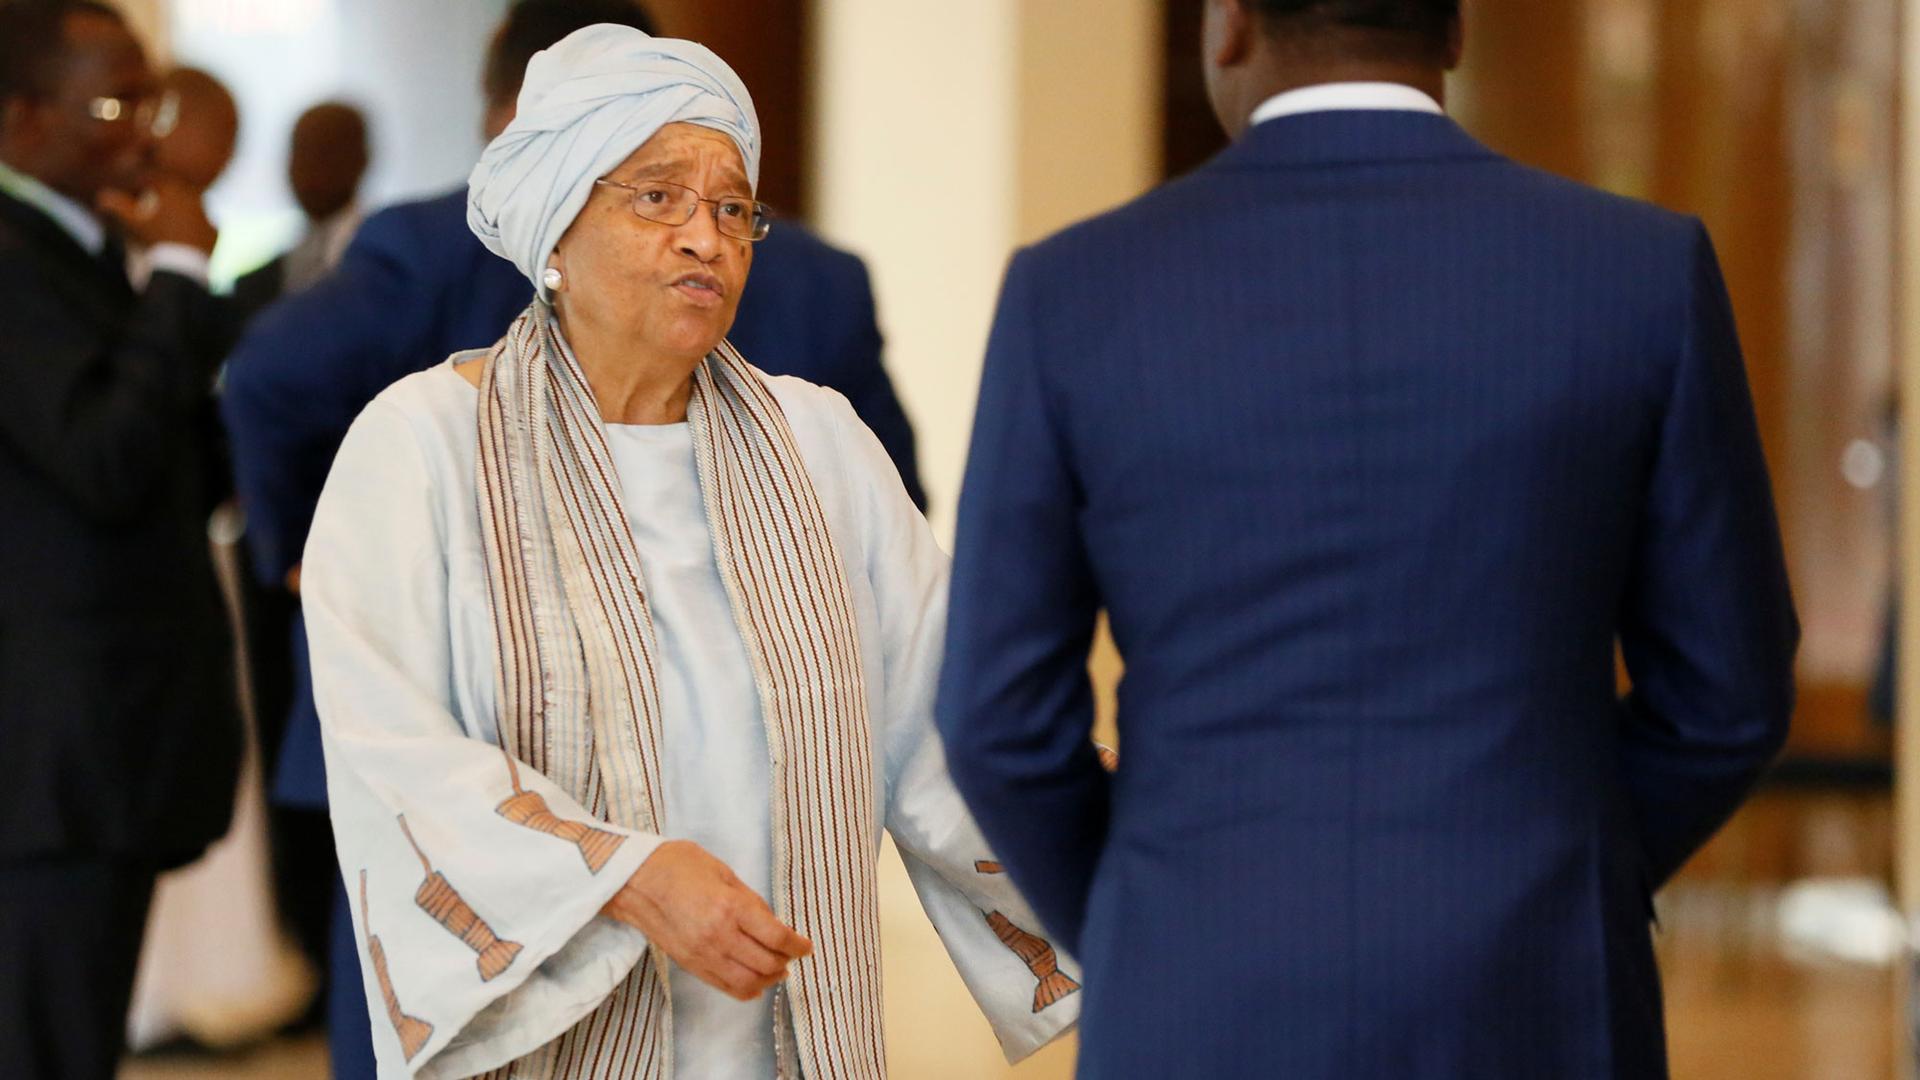 Ellen Sirleaf wears a grey headwrap and robe as she speaks to a man in a blue suit.